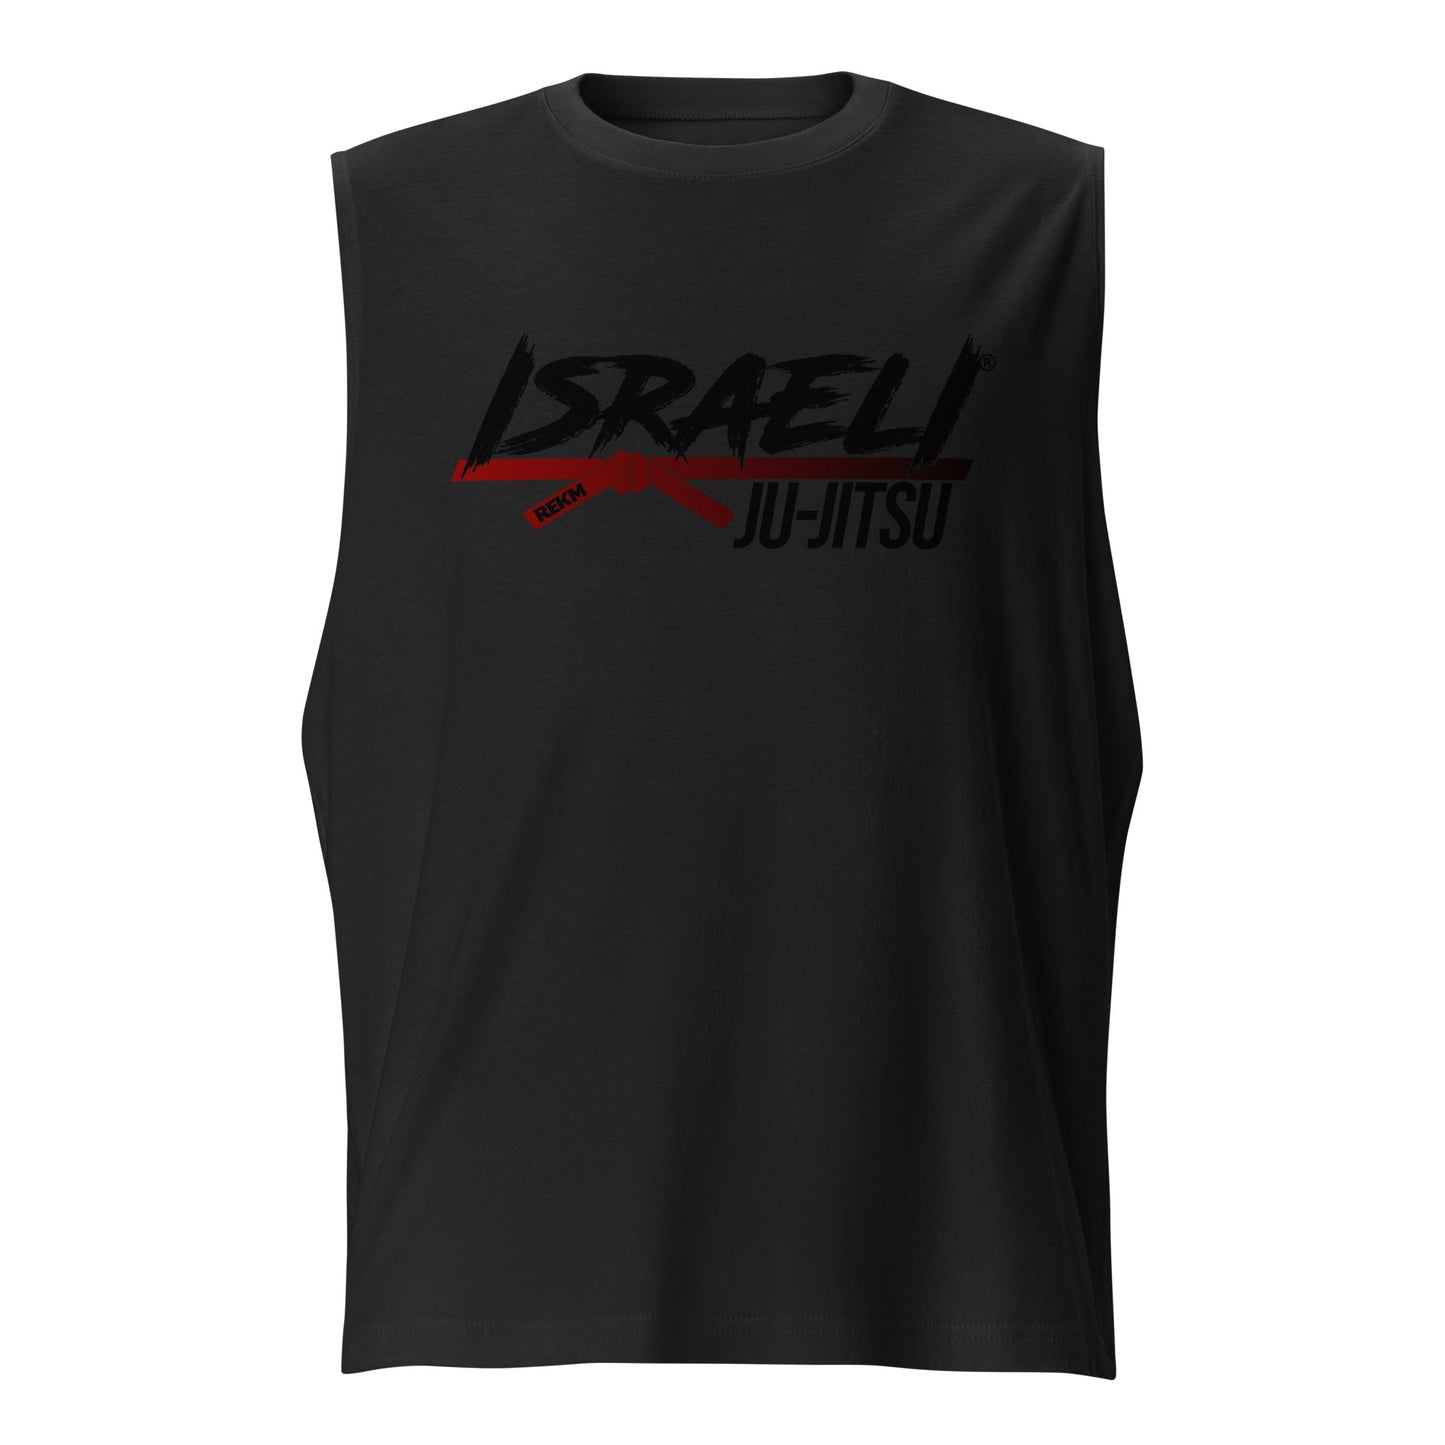 Israeli Ju-Jitsu Muscle Shirt